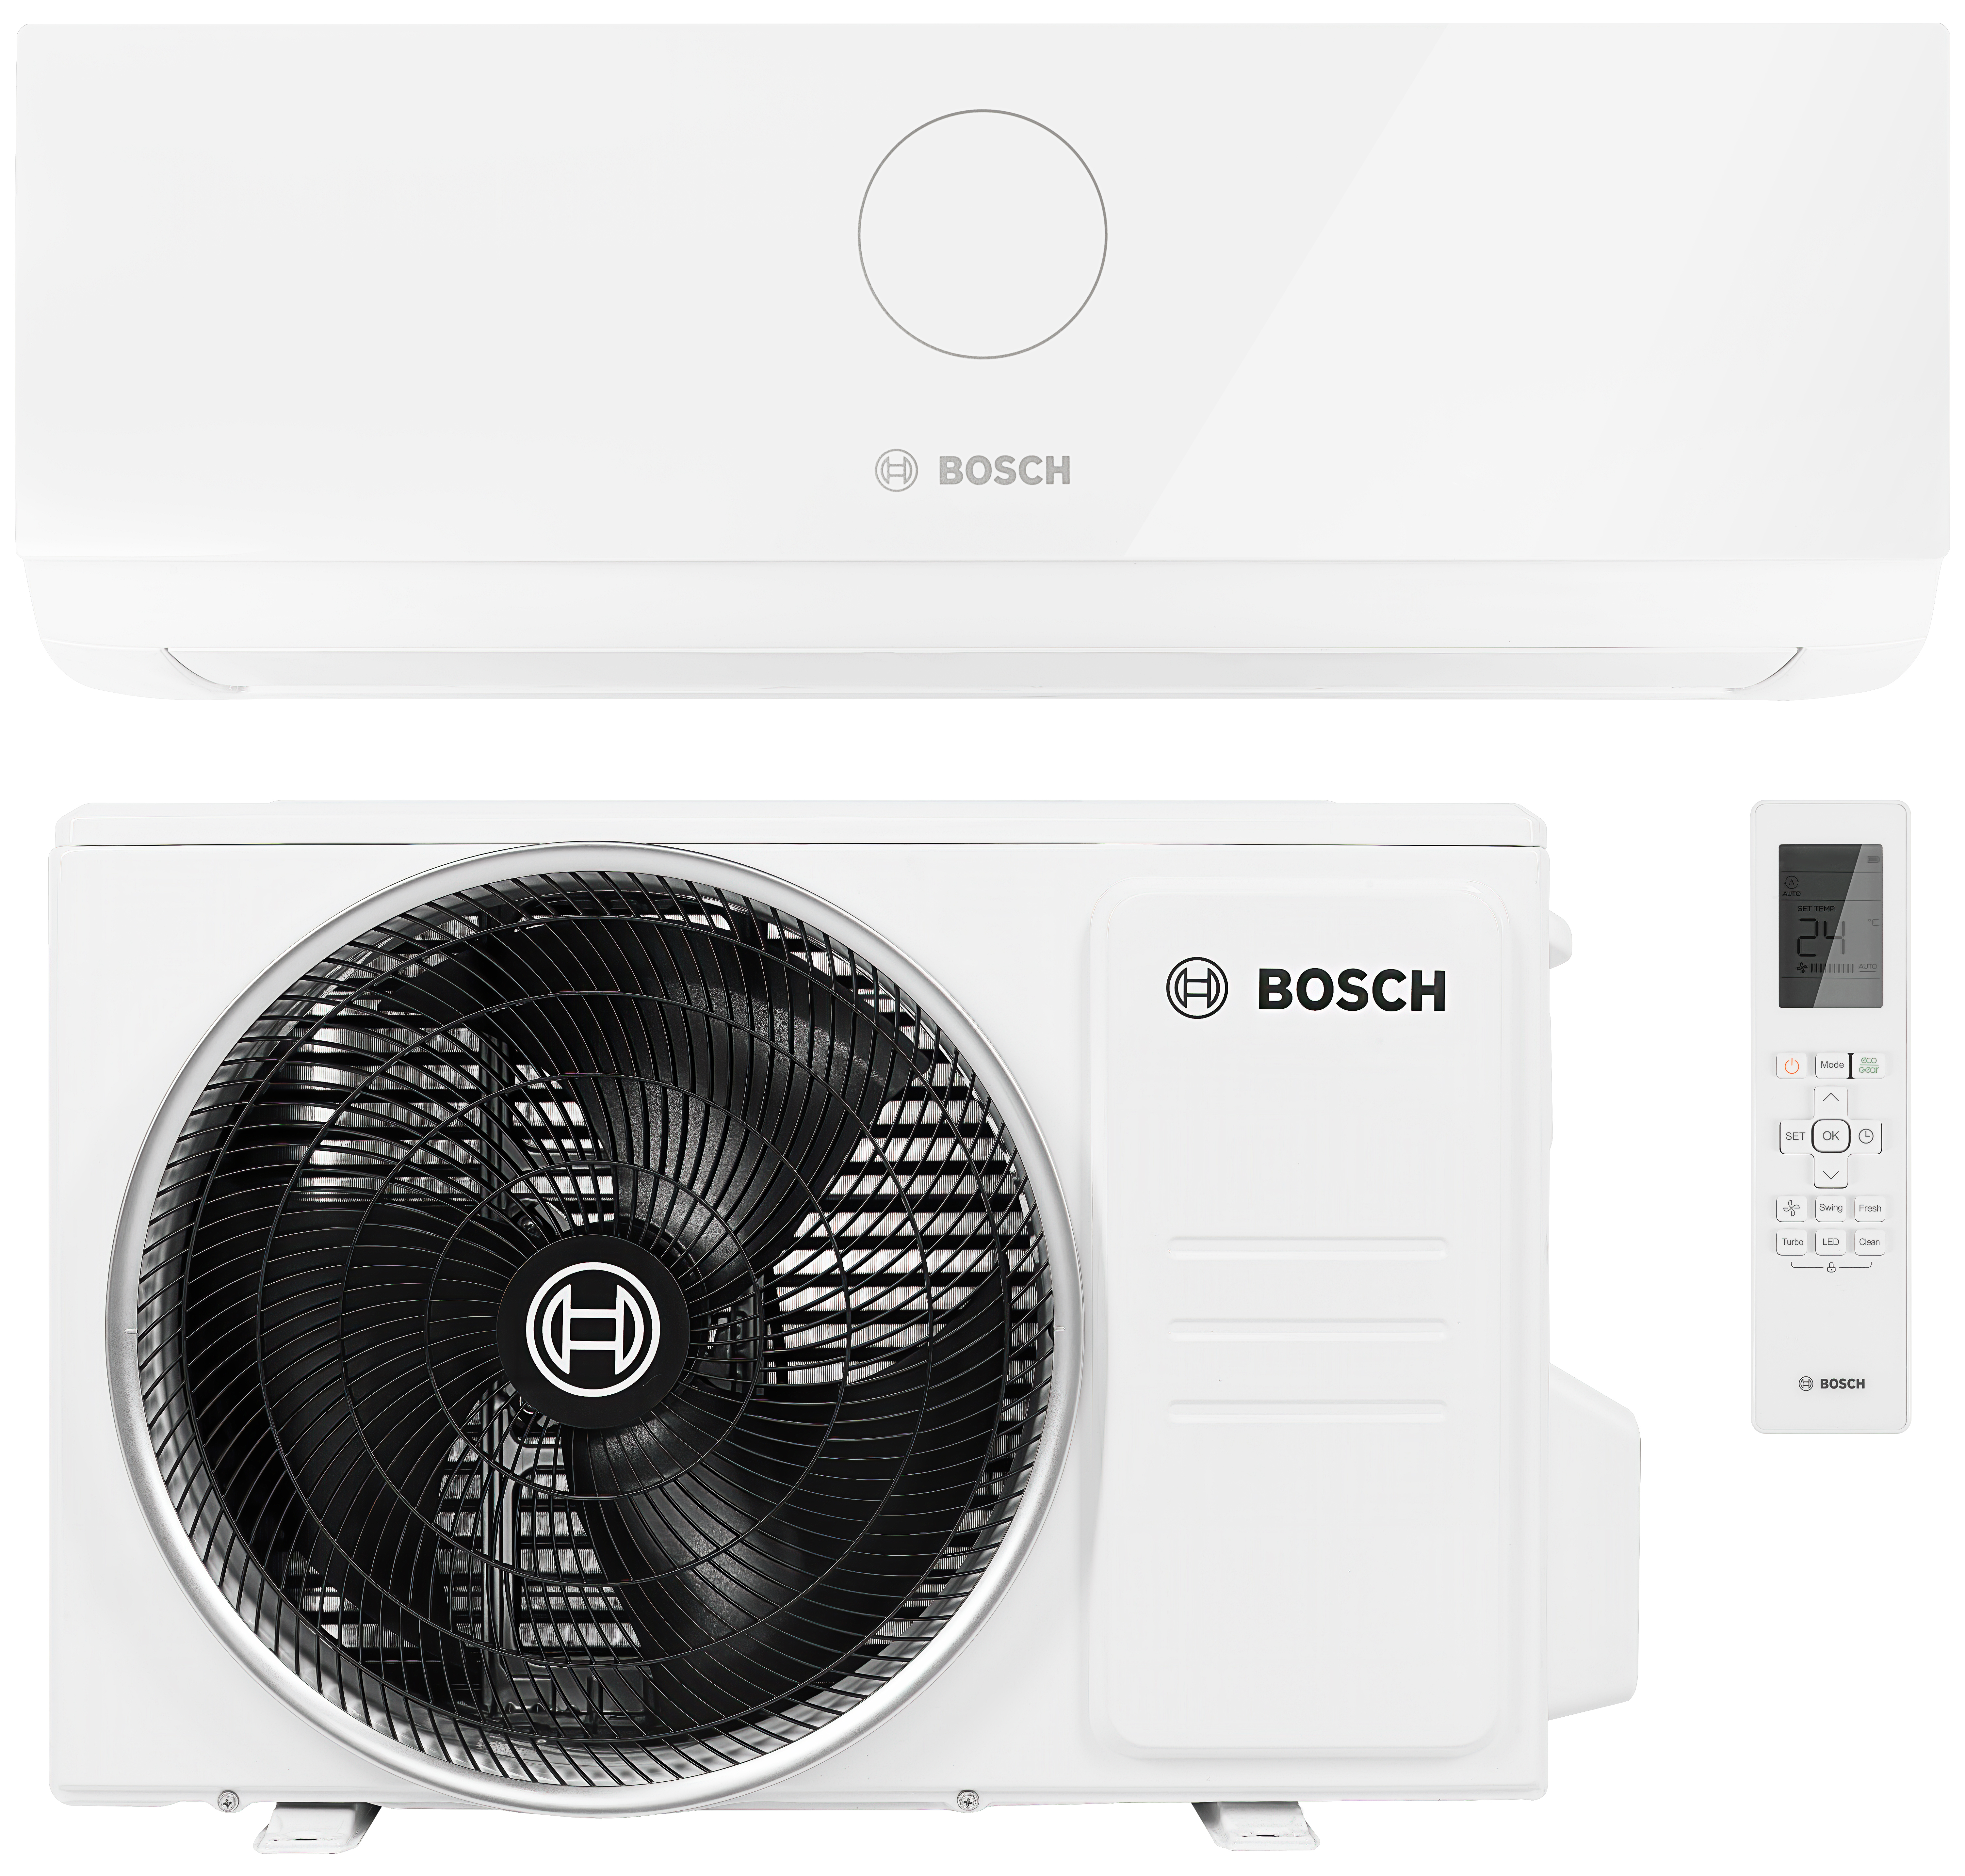 Инструкция кондиционер с таймером на 24 часа Bosch Climate CL3000i 26 E